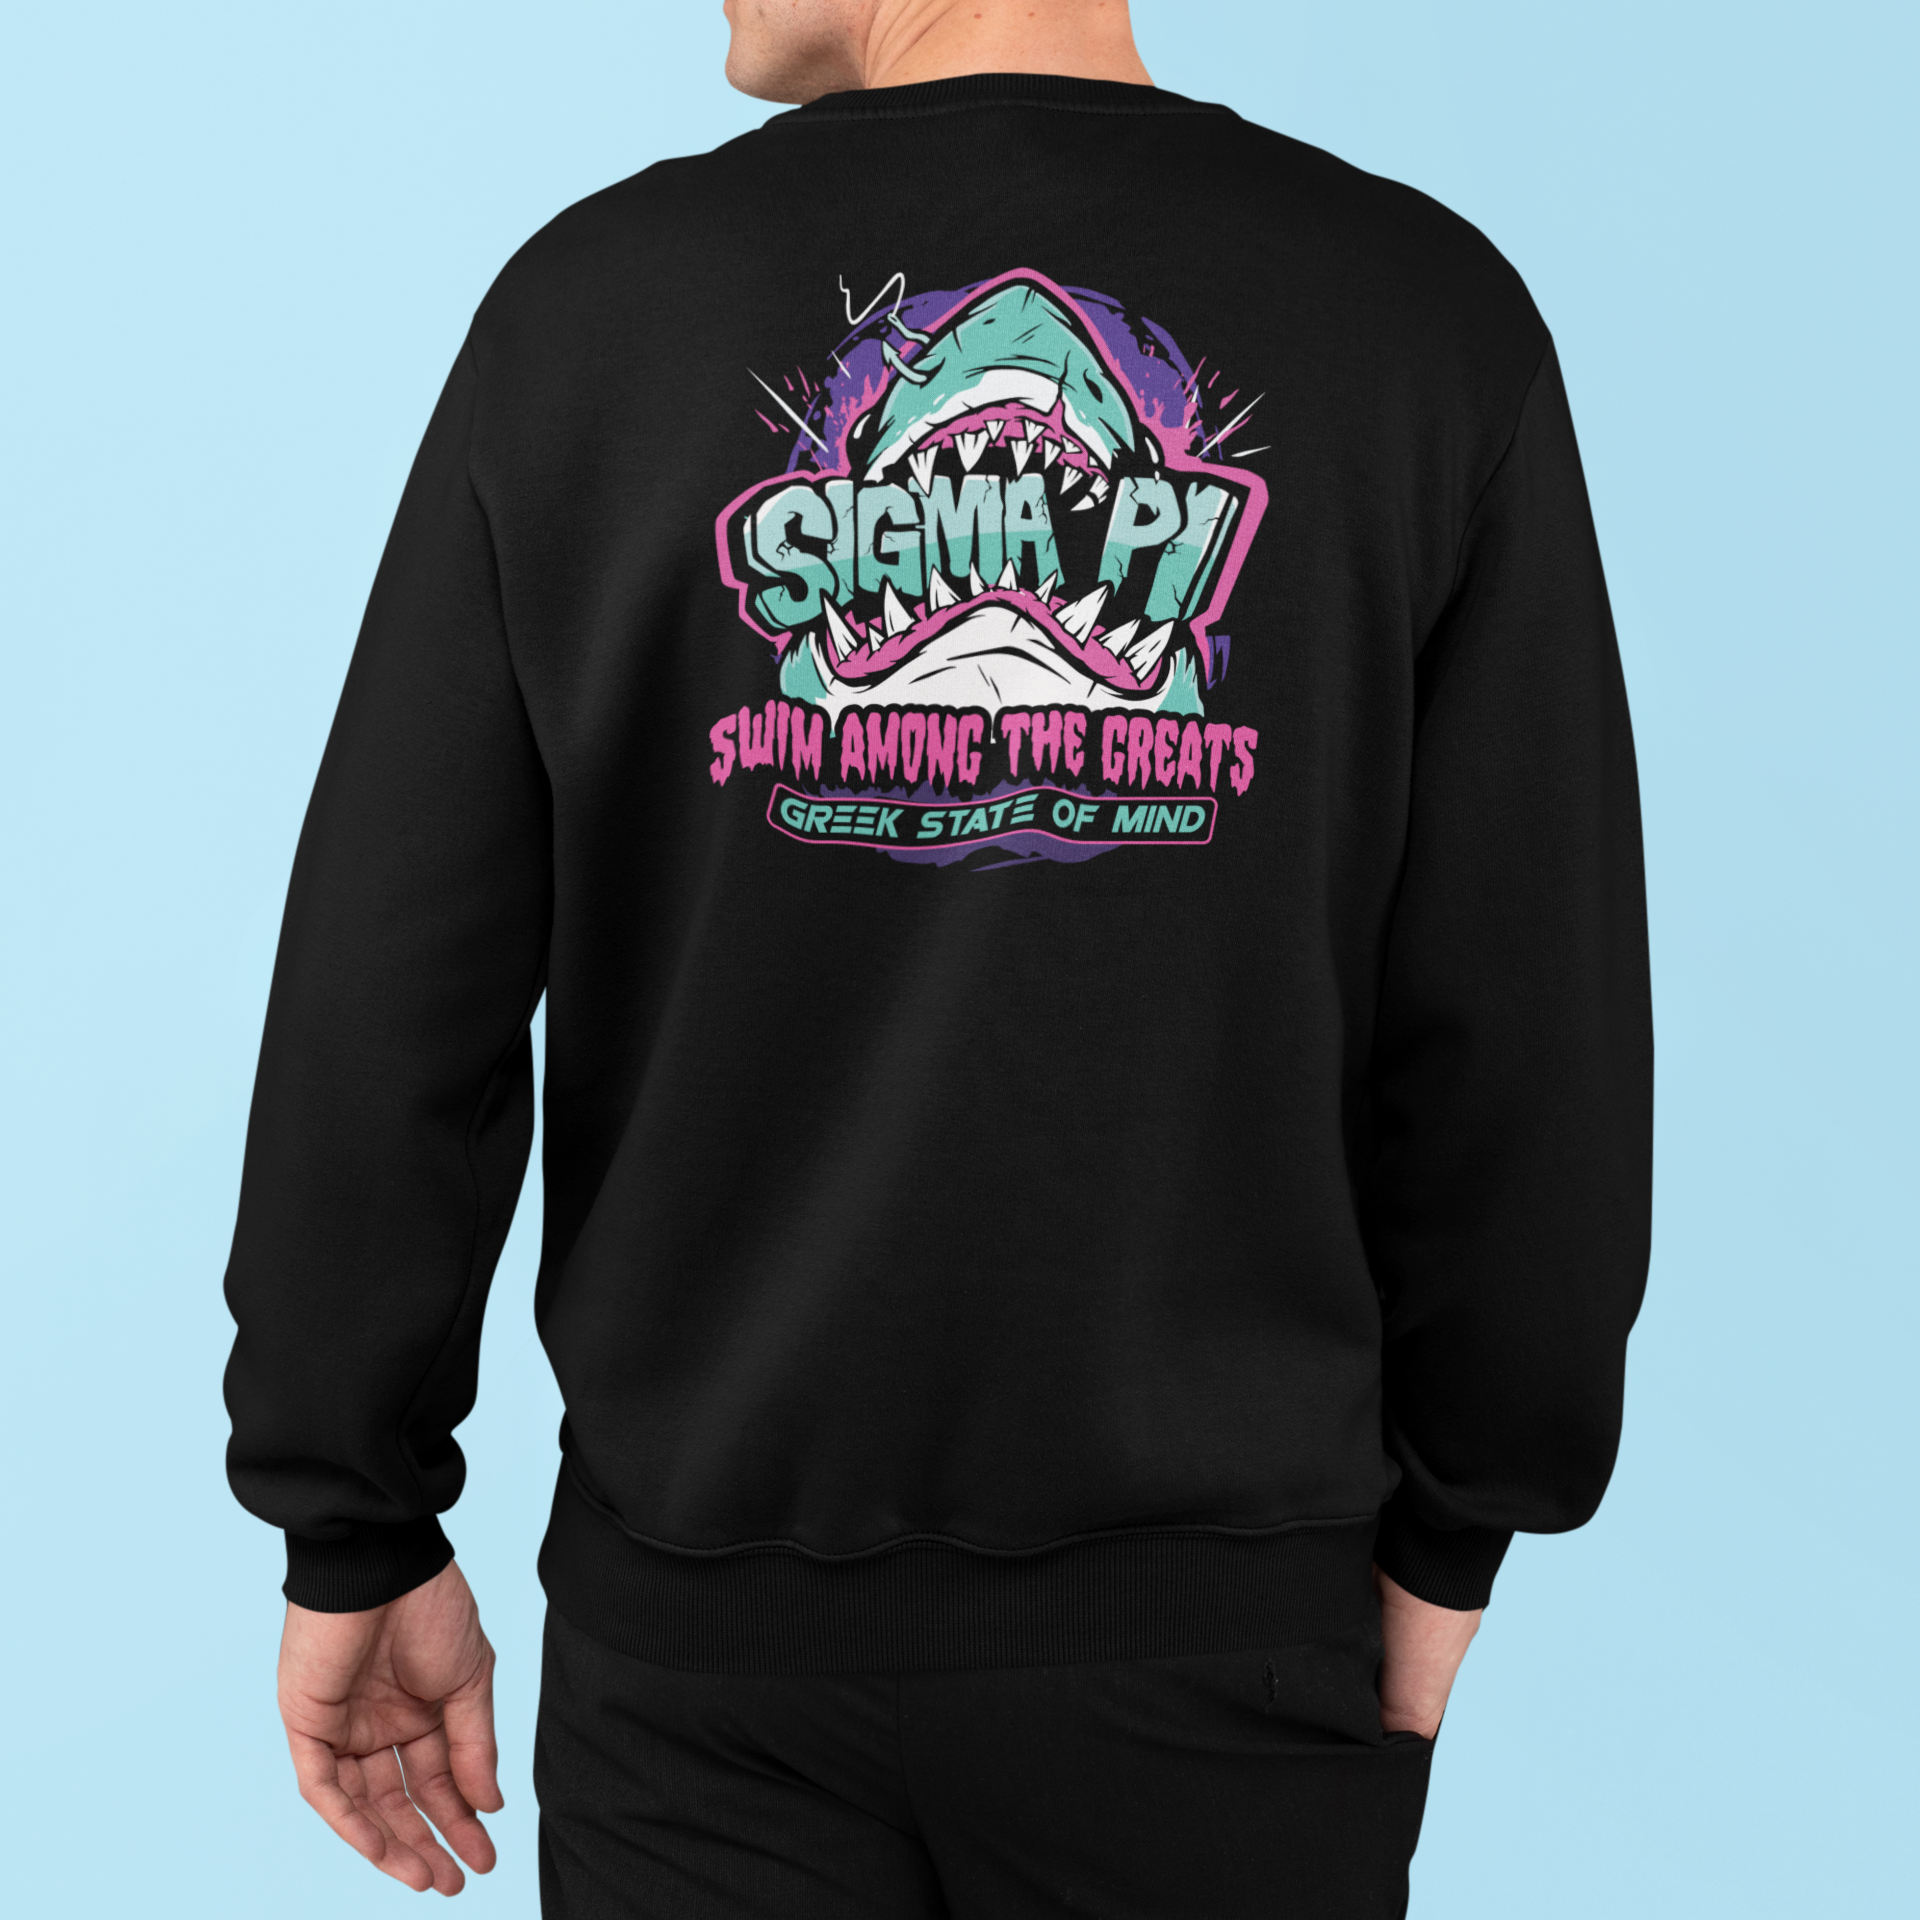 Sigma Pi Graphic Crewneck Sweatshirt | The Deep End | Sigma Pi Apparel and Merchandise